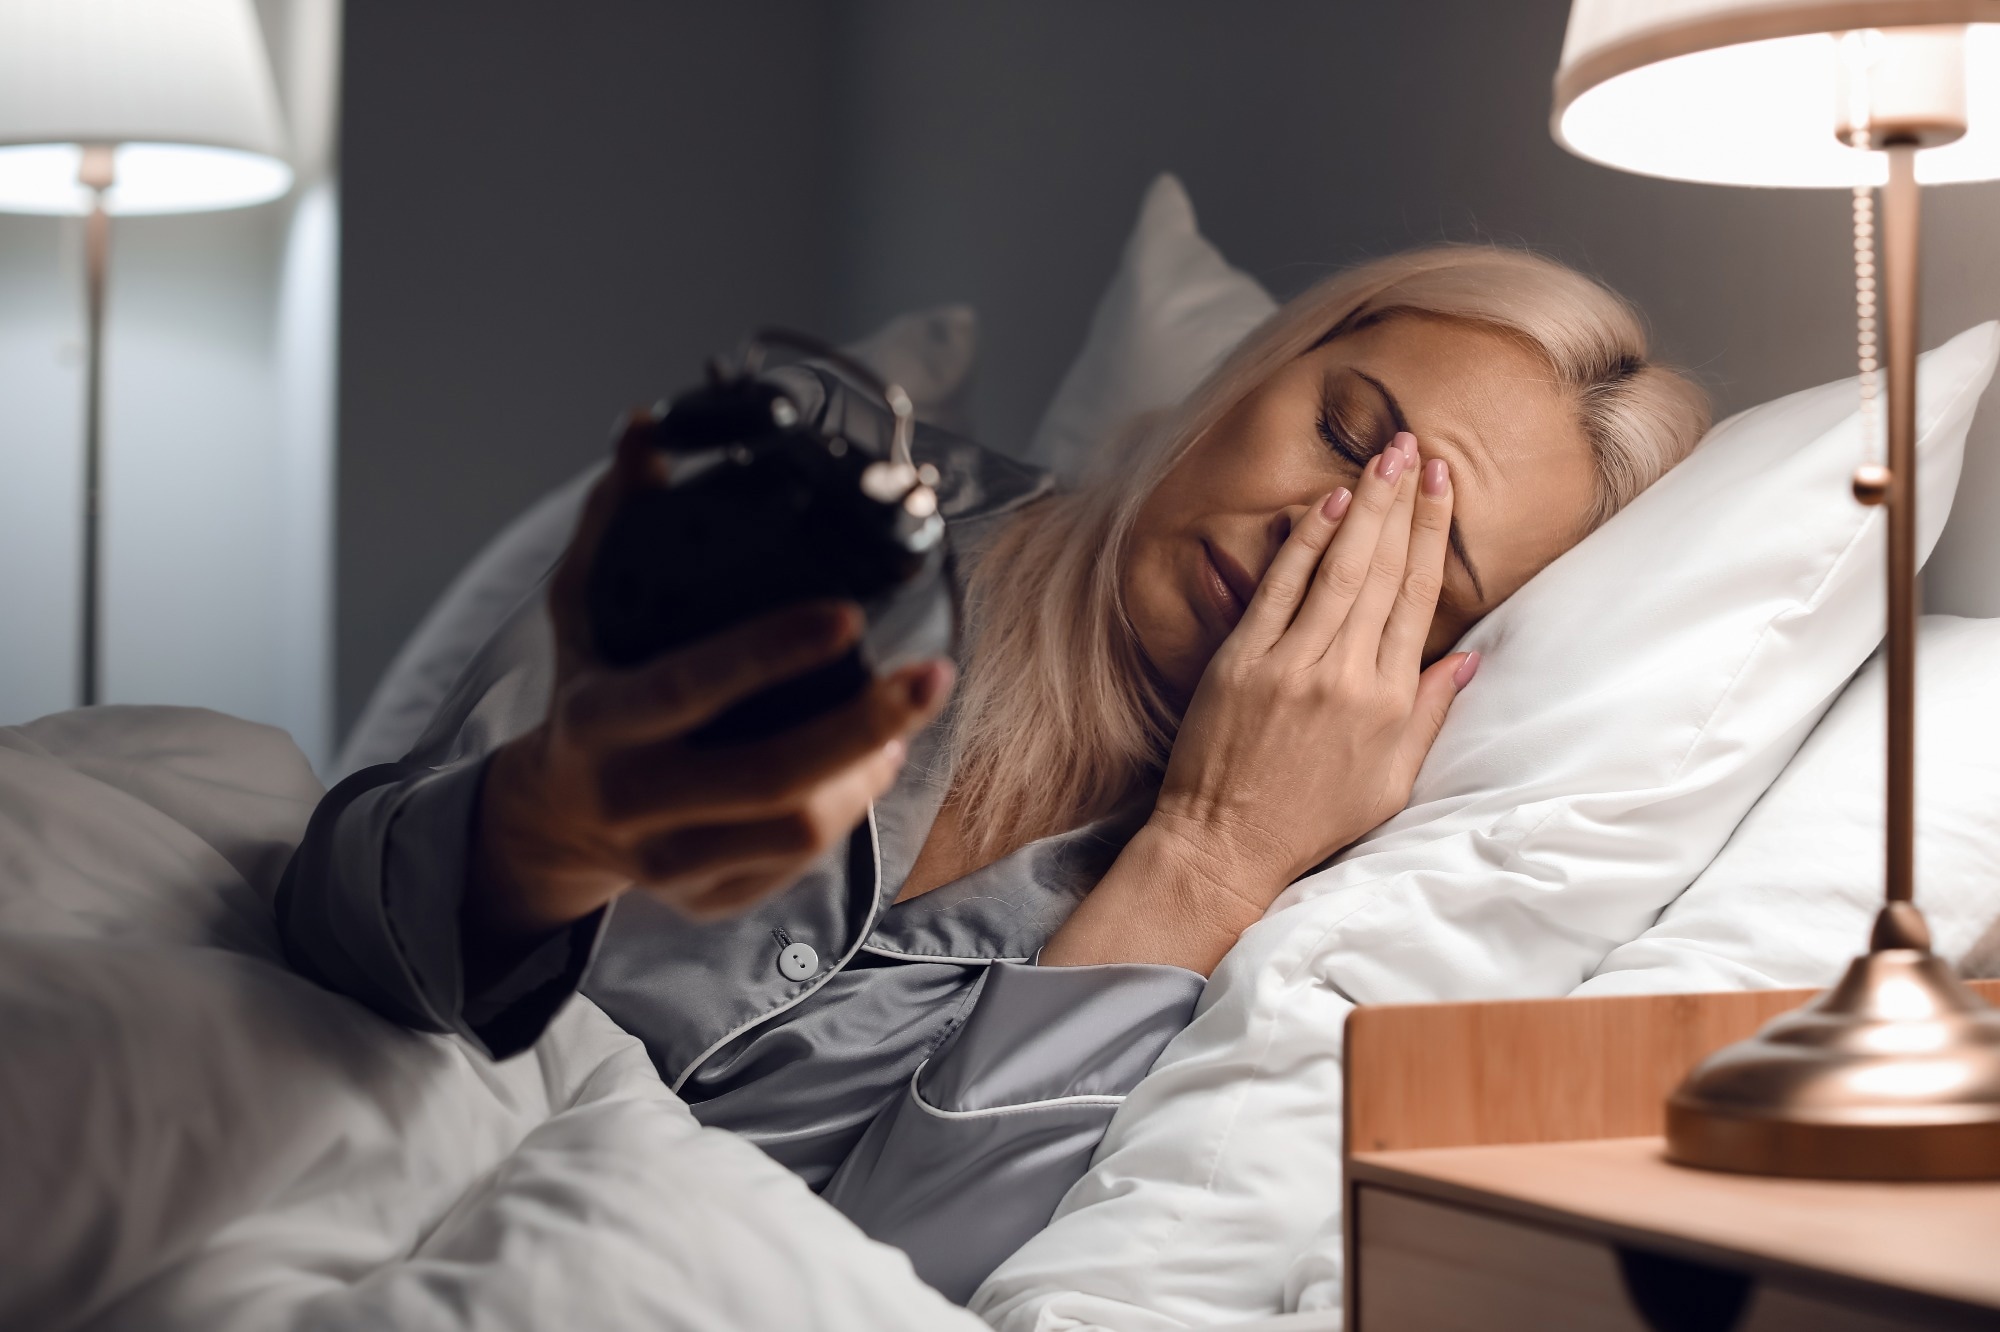 Study: Sleep–wake changes and incident depressive symptoms in midlife women. Image Credit: Pixel-Shot/Shutterstock.com